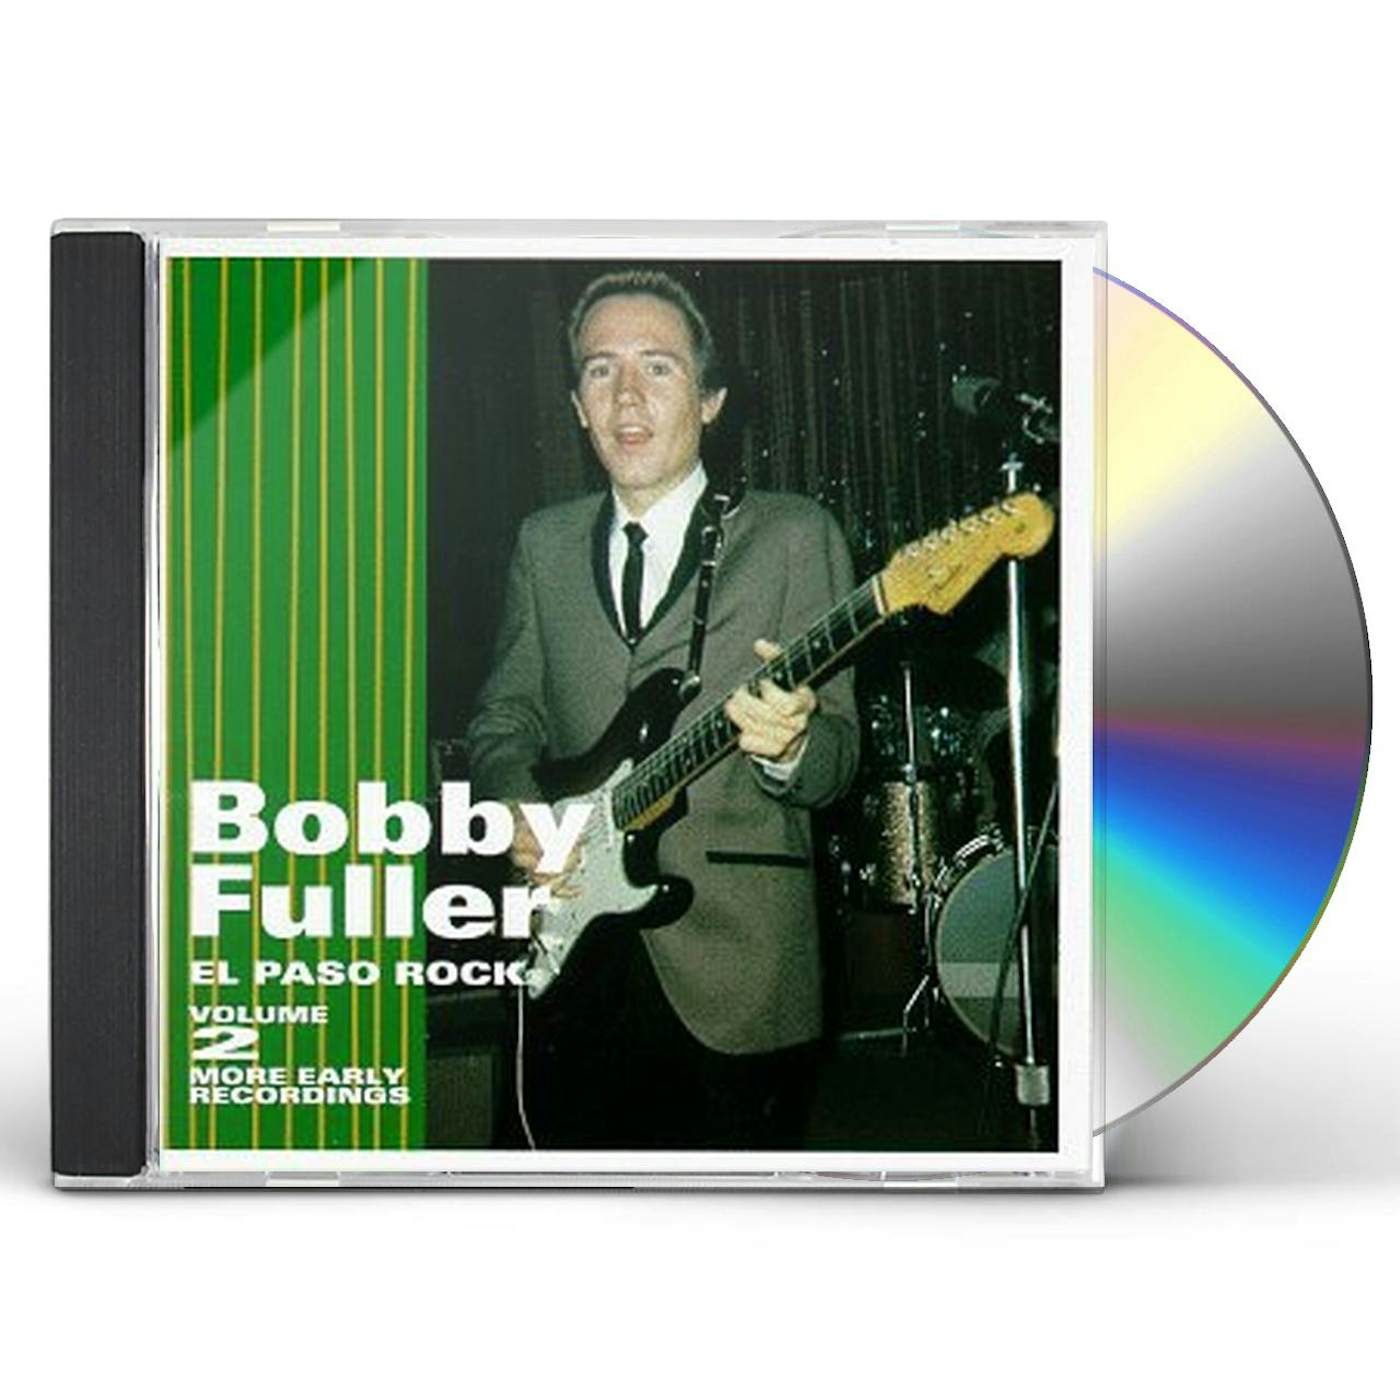 Bobby Fuller EL PASO ROCK 2 CD